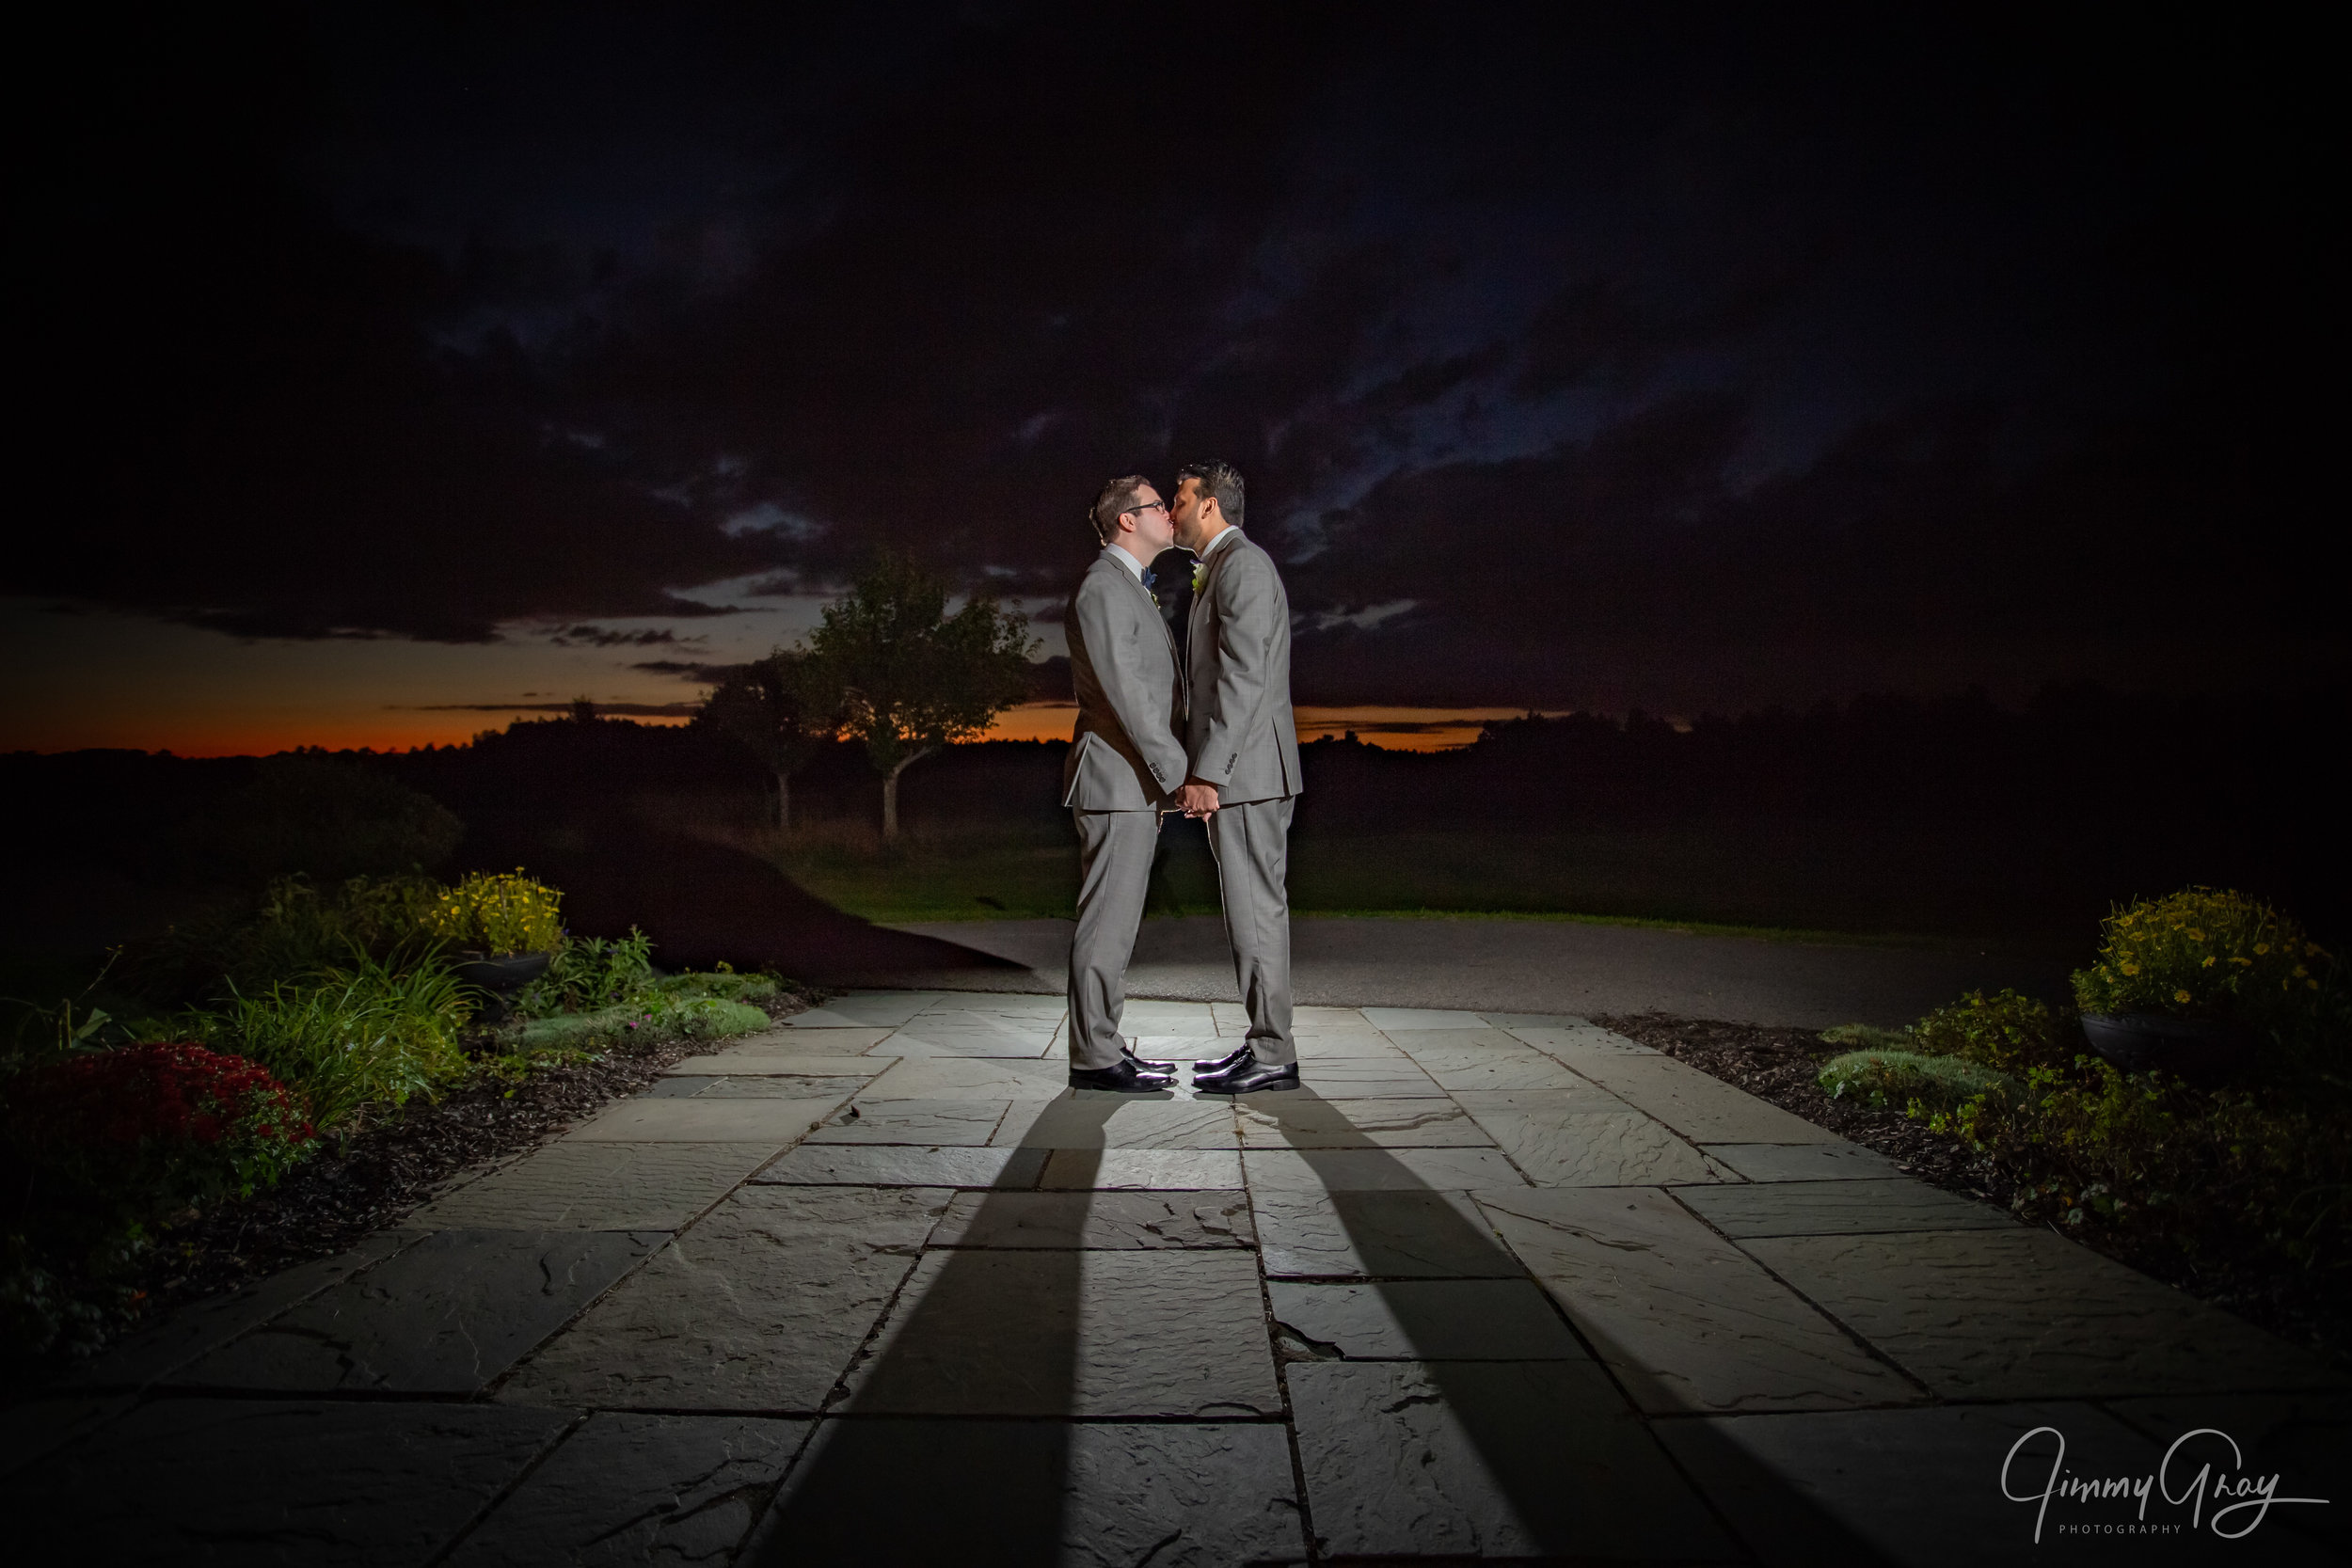 MA Wedding Photography - Jimmy Gray Photo - Lakeville, MA - LeBaron Hills Country Club - Shot For Kady Provost Photography